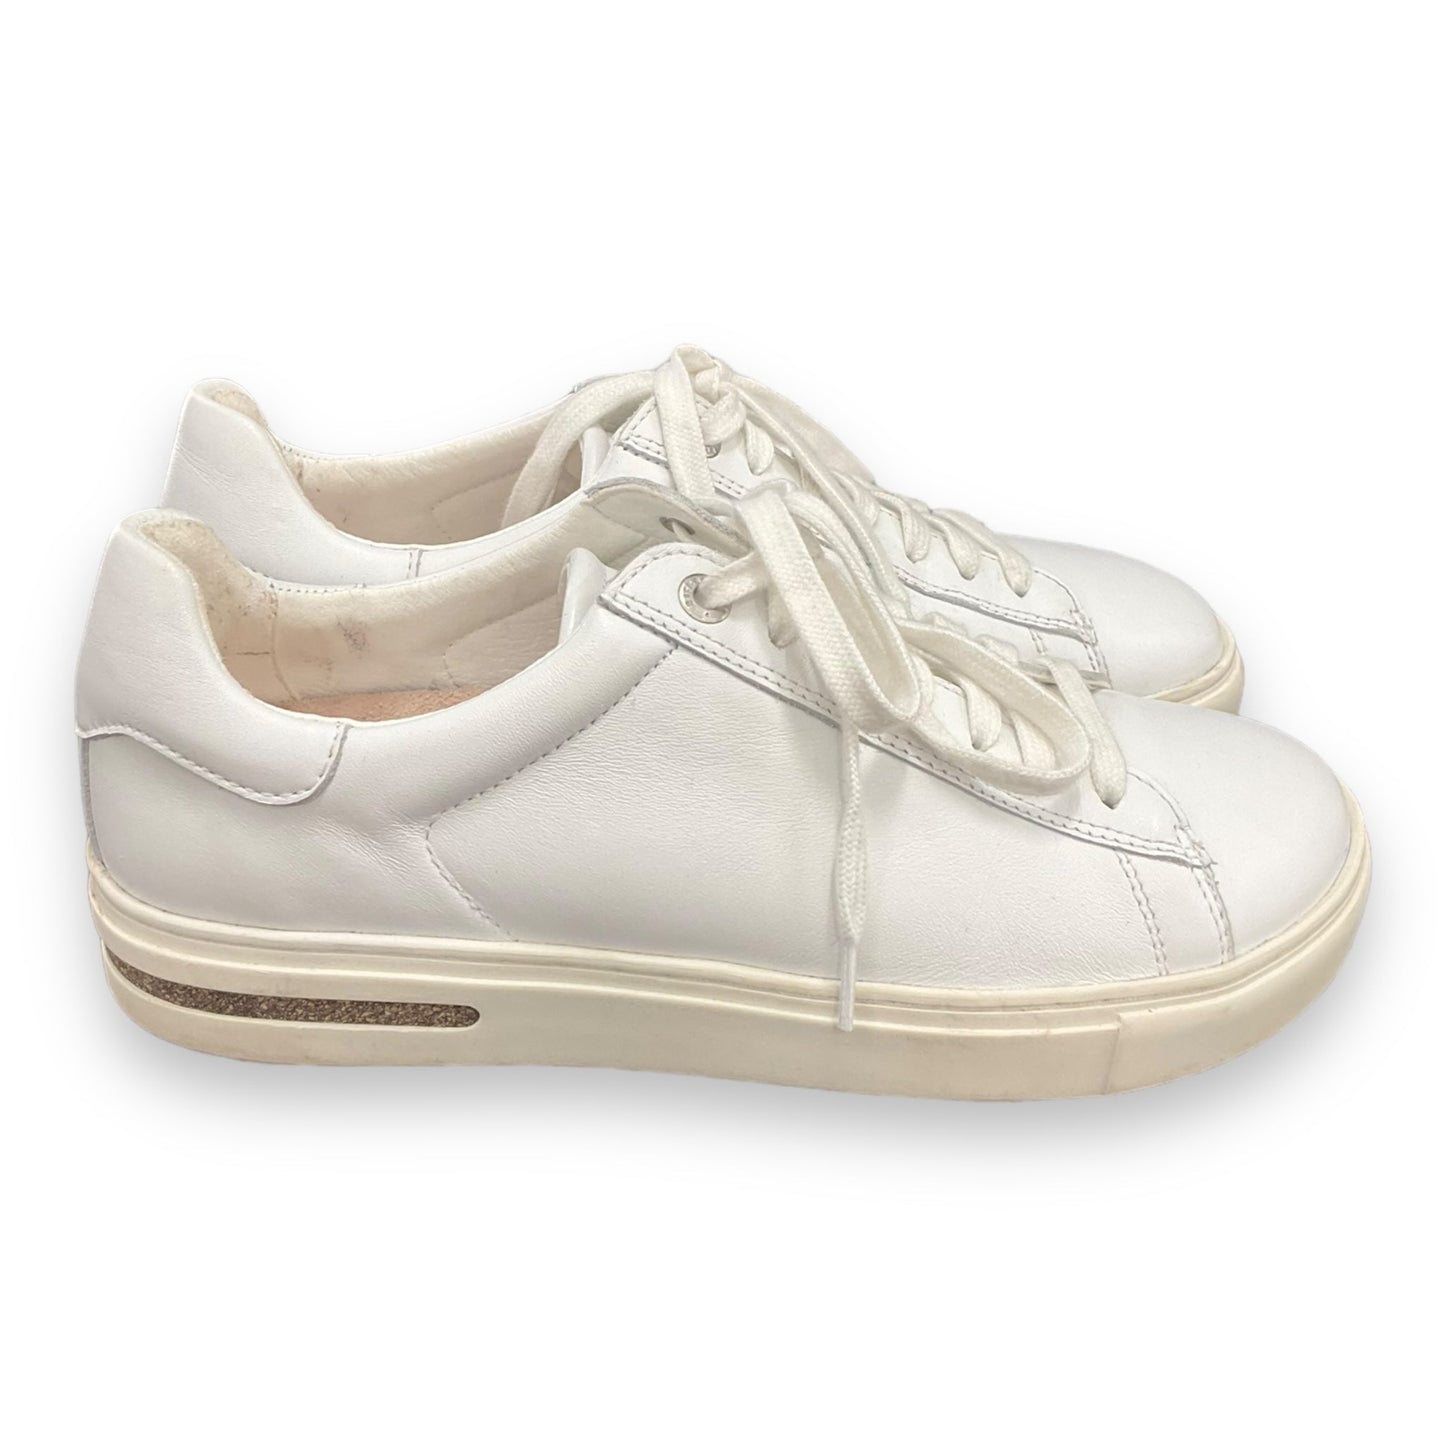 Shoes Sneakers By Birkenstock  Size: 6.5